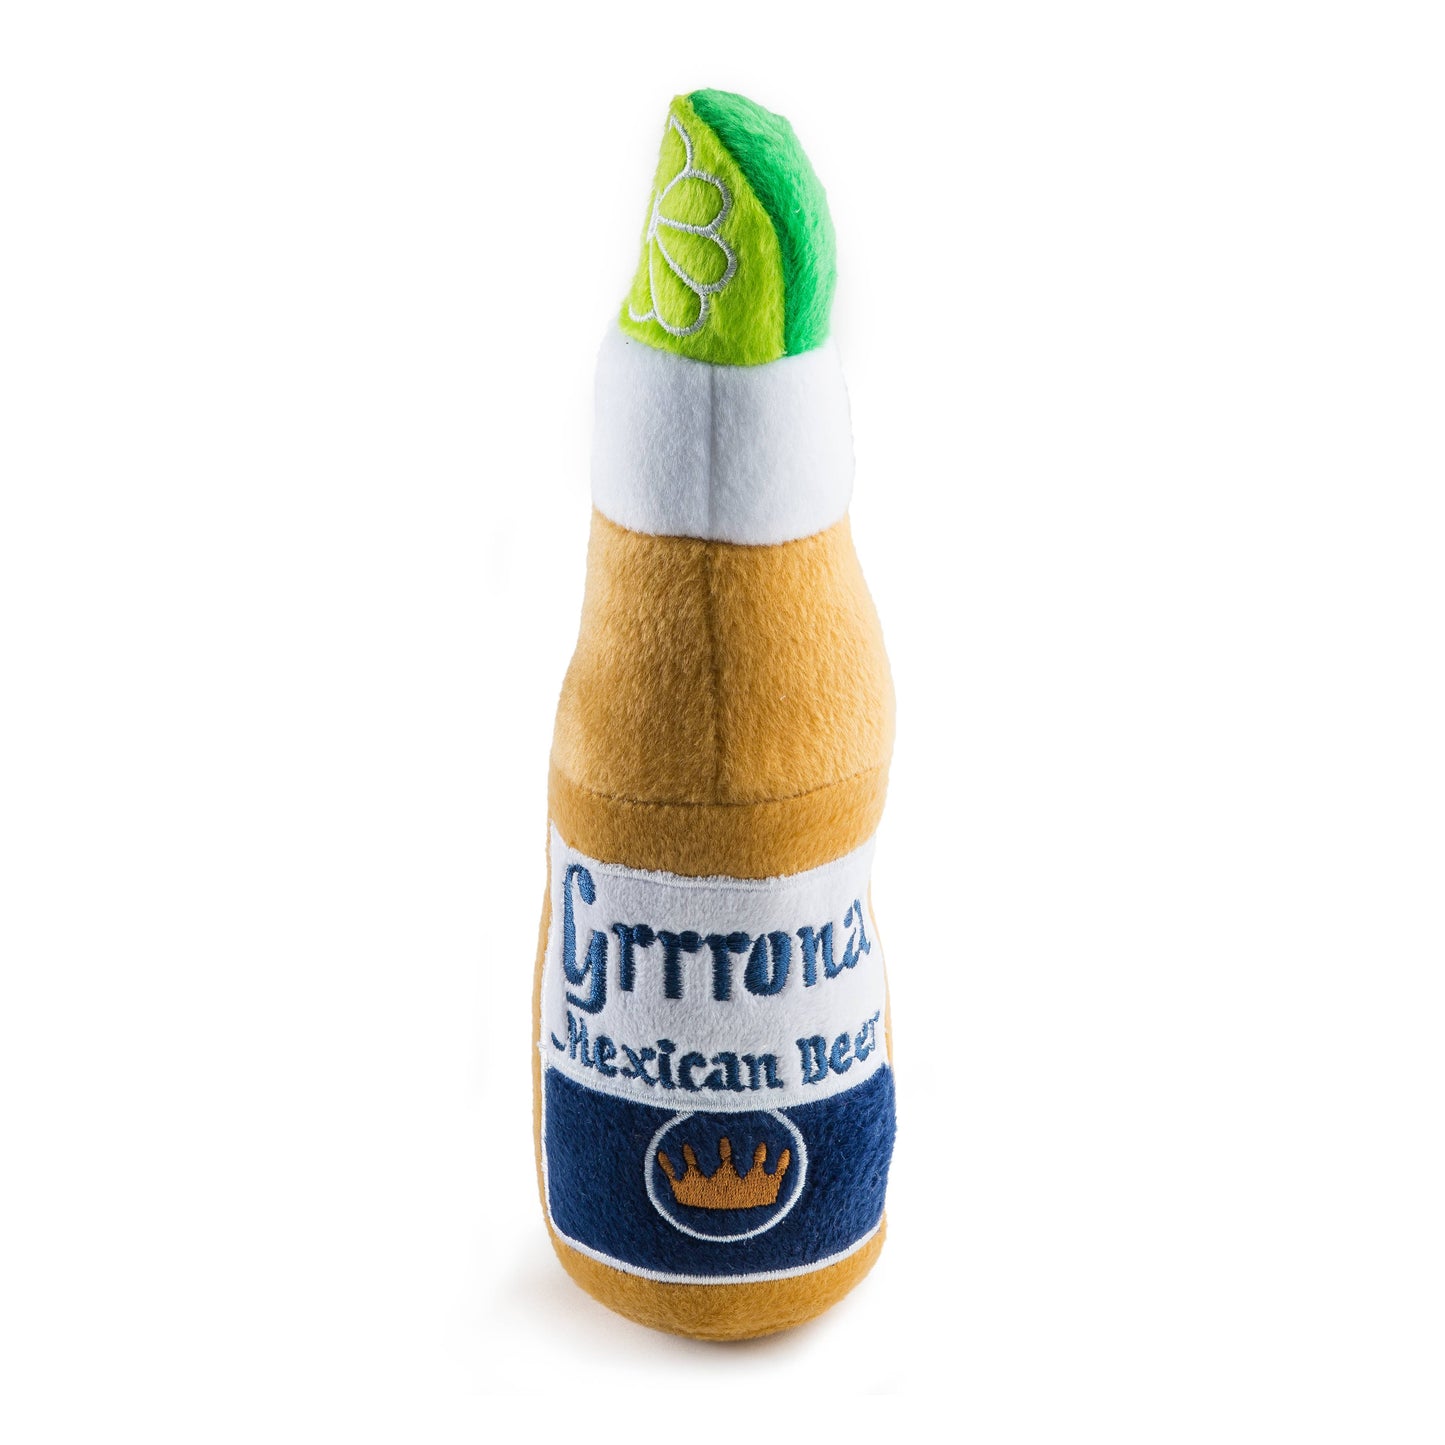 Grrrona Beer Bottle Toy- Large